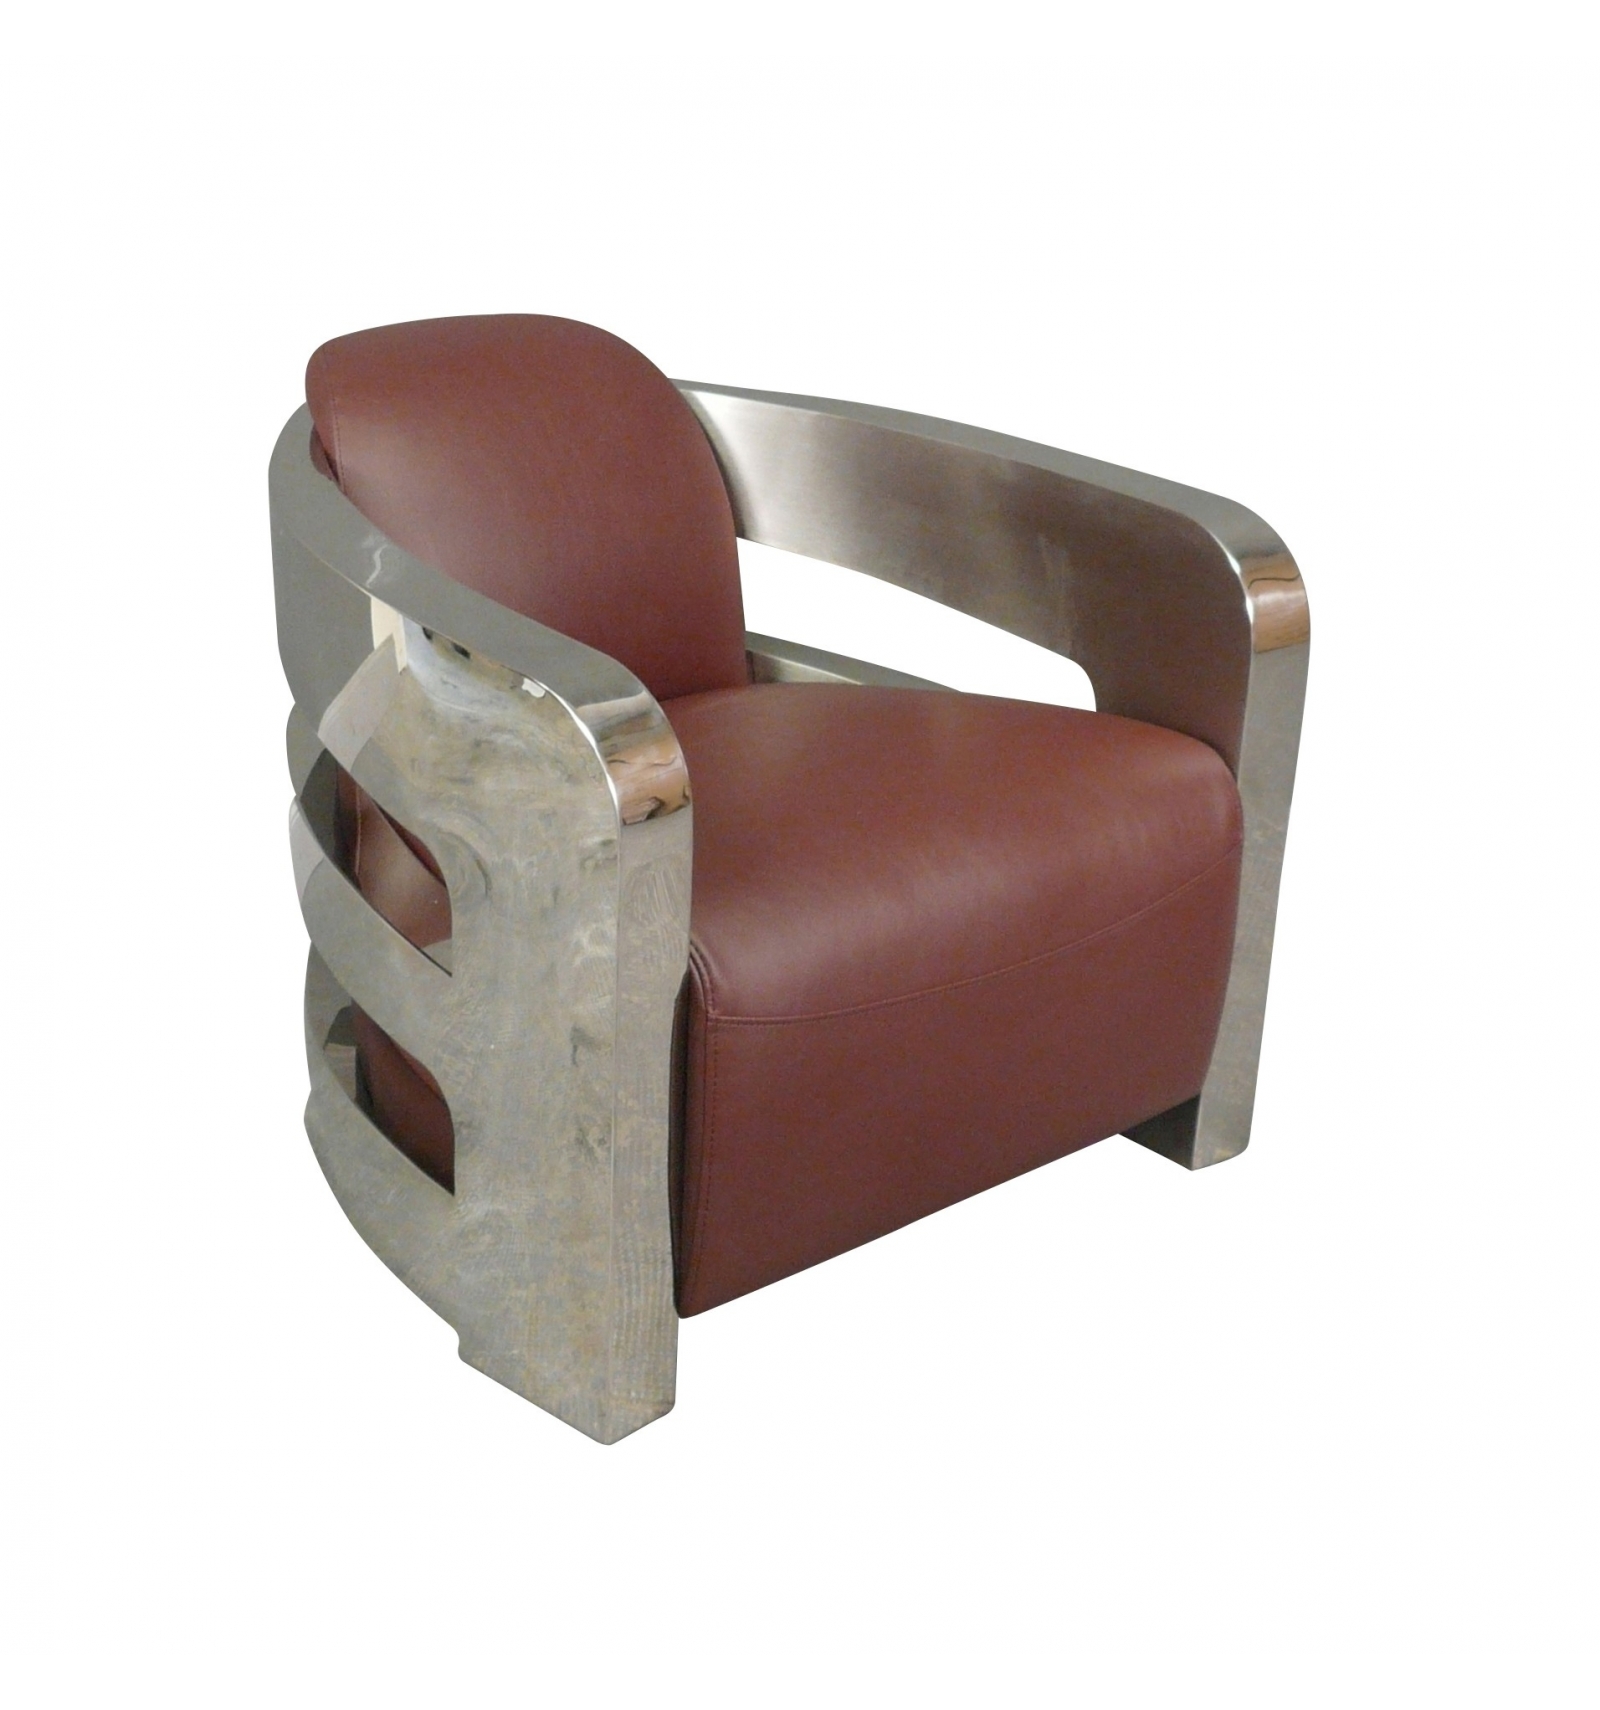 design aviator chair  aviator furniture